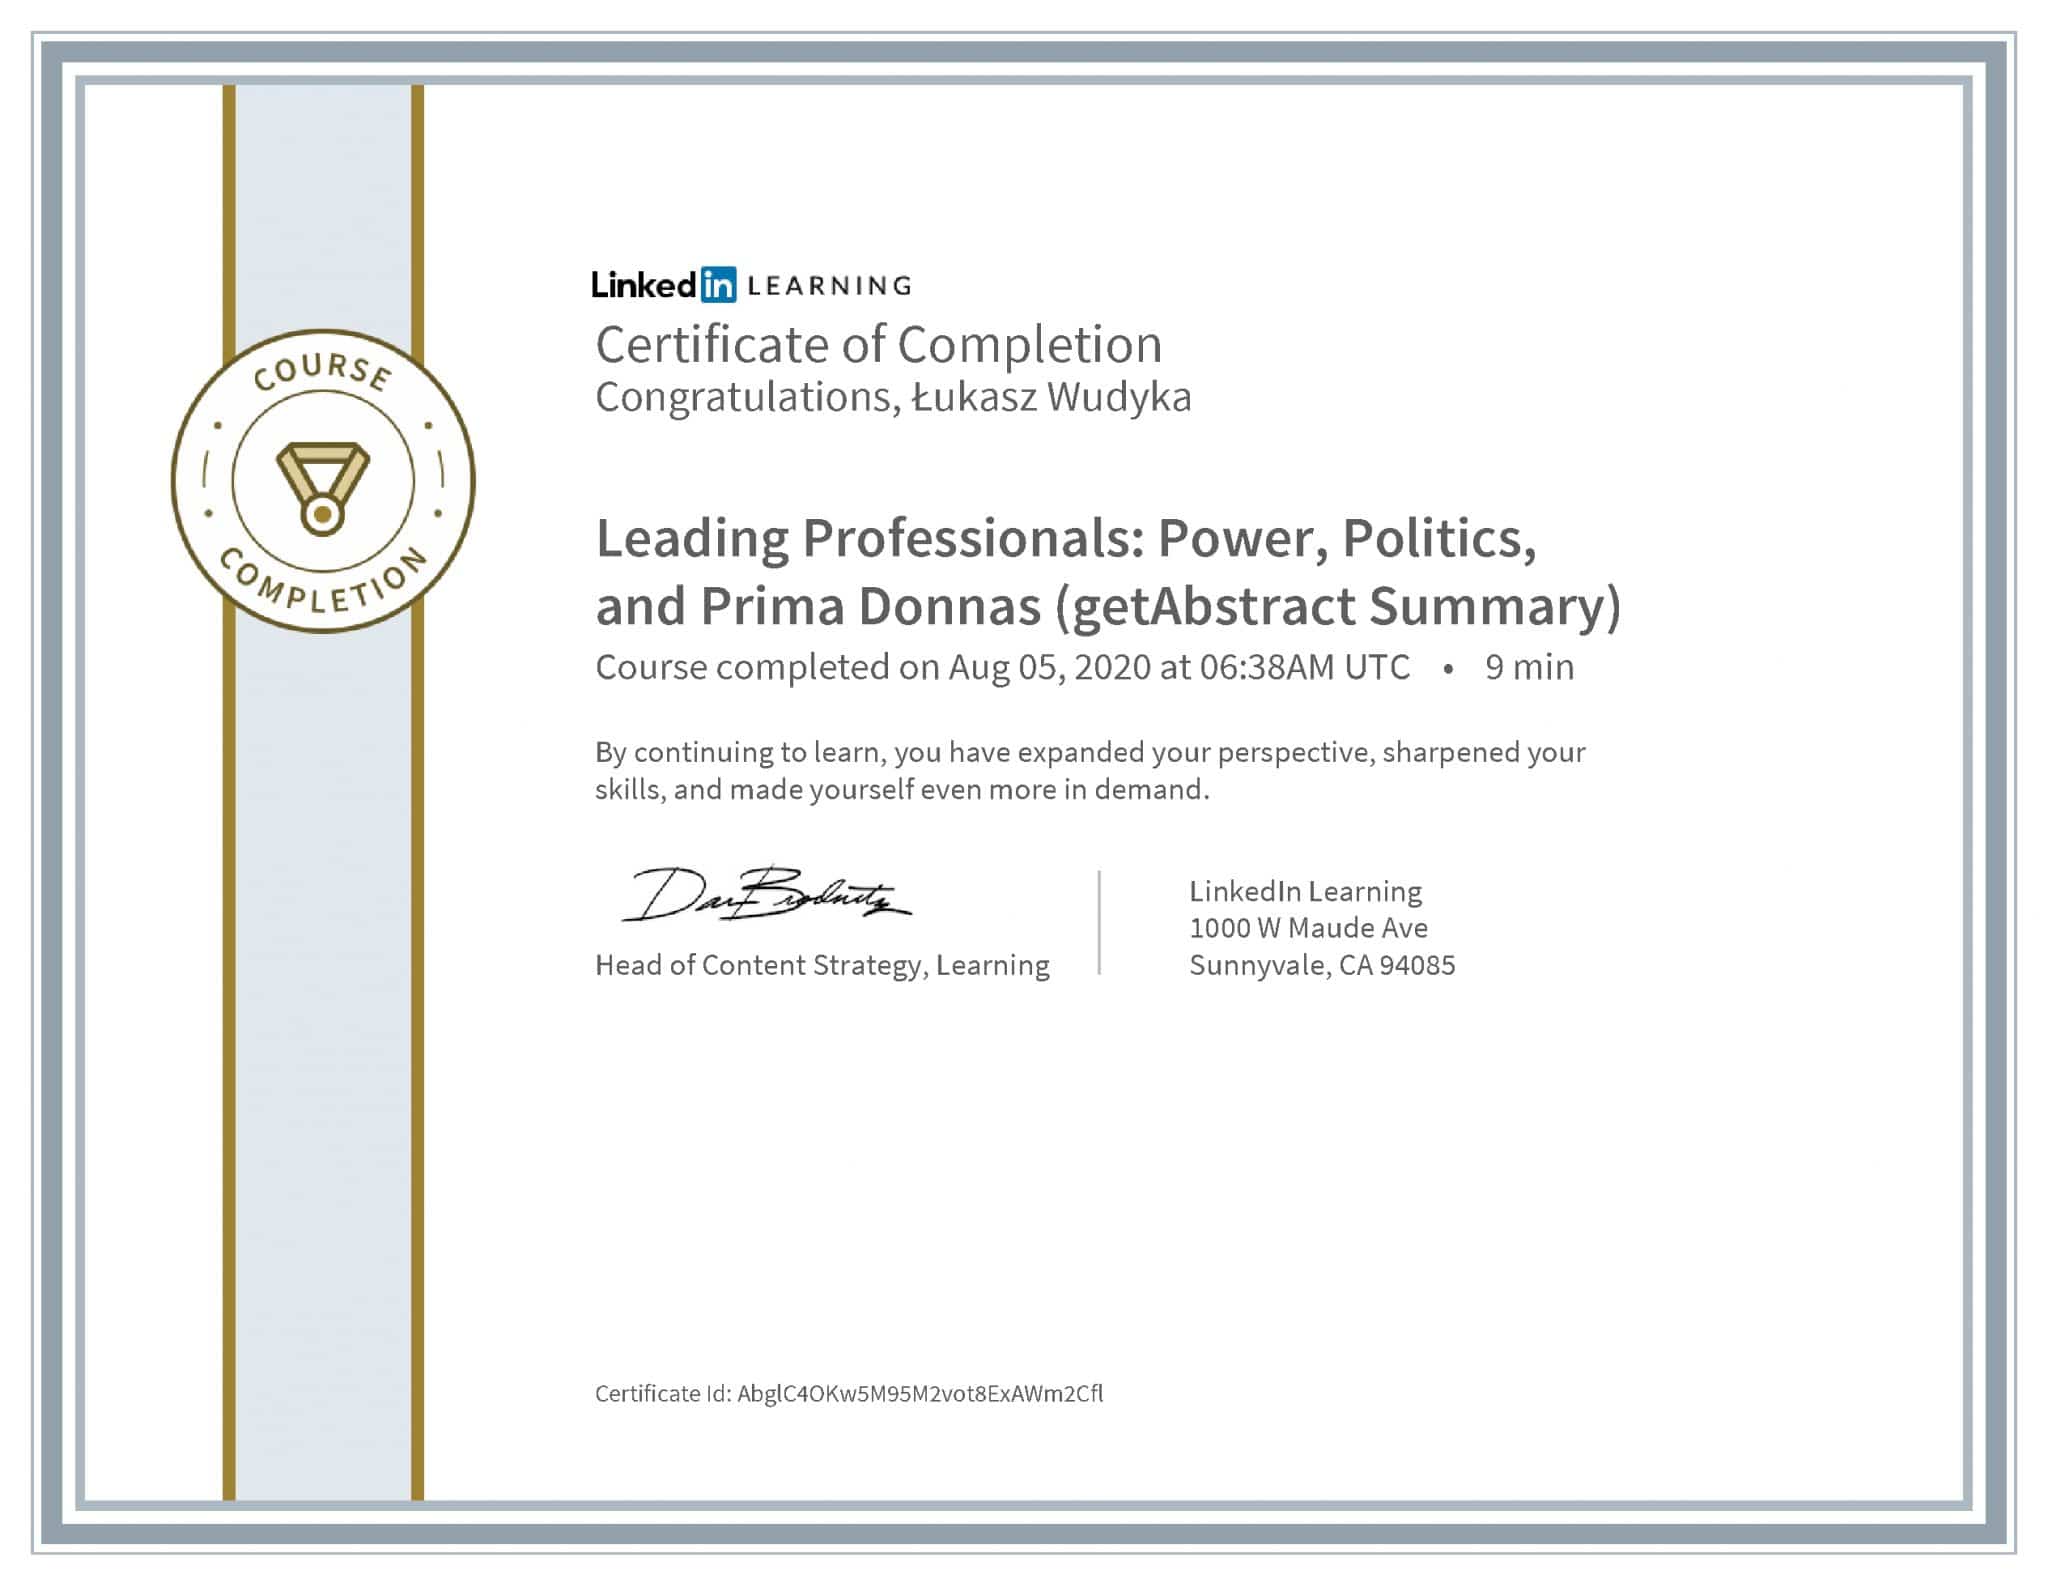 Łukasz Wudyka certyfikat LinkedIn Leading Professionals: Power, Politics, and Prima Donnas (getAbstract Summary)